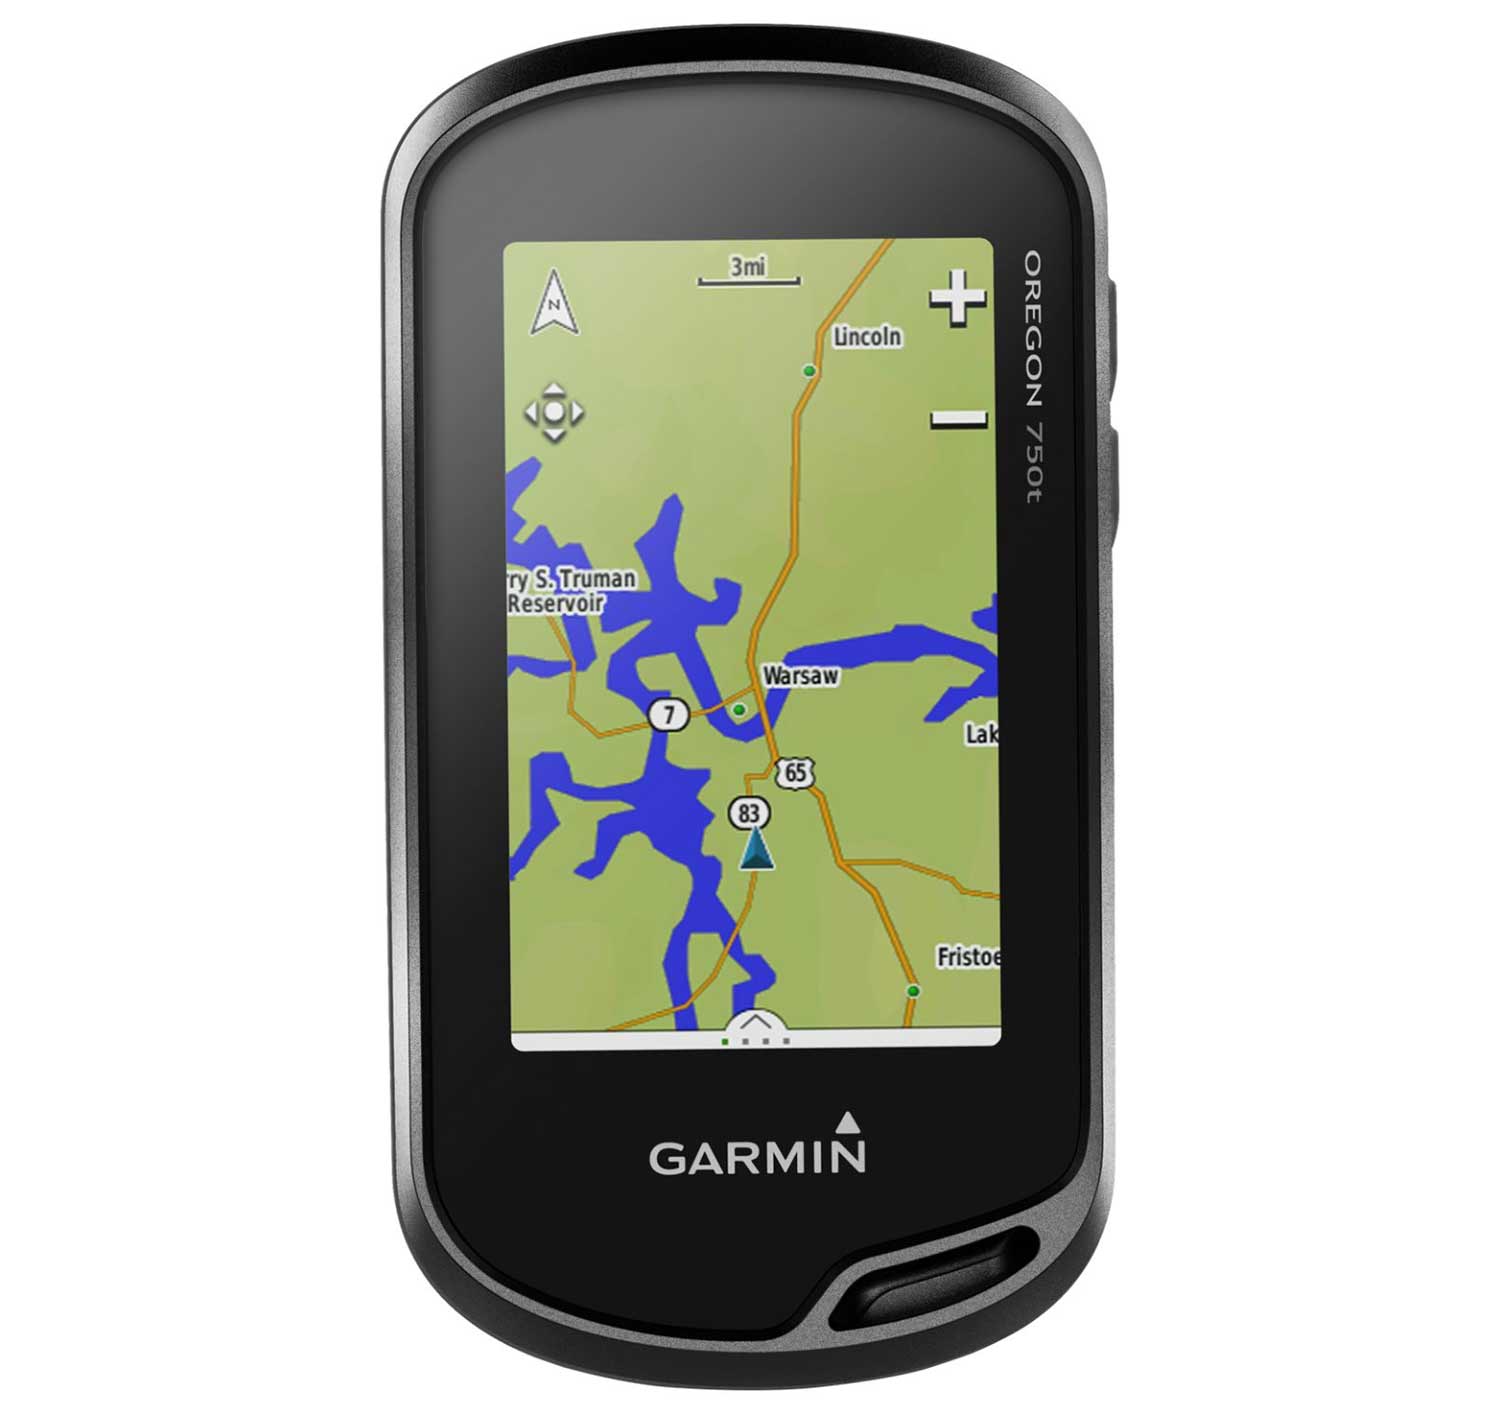 Garmin Oregon 750t Handheld GPS